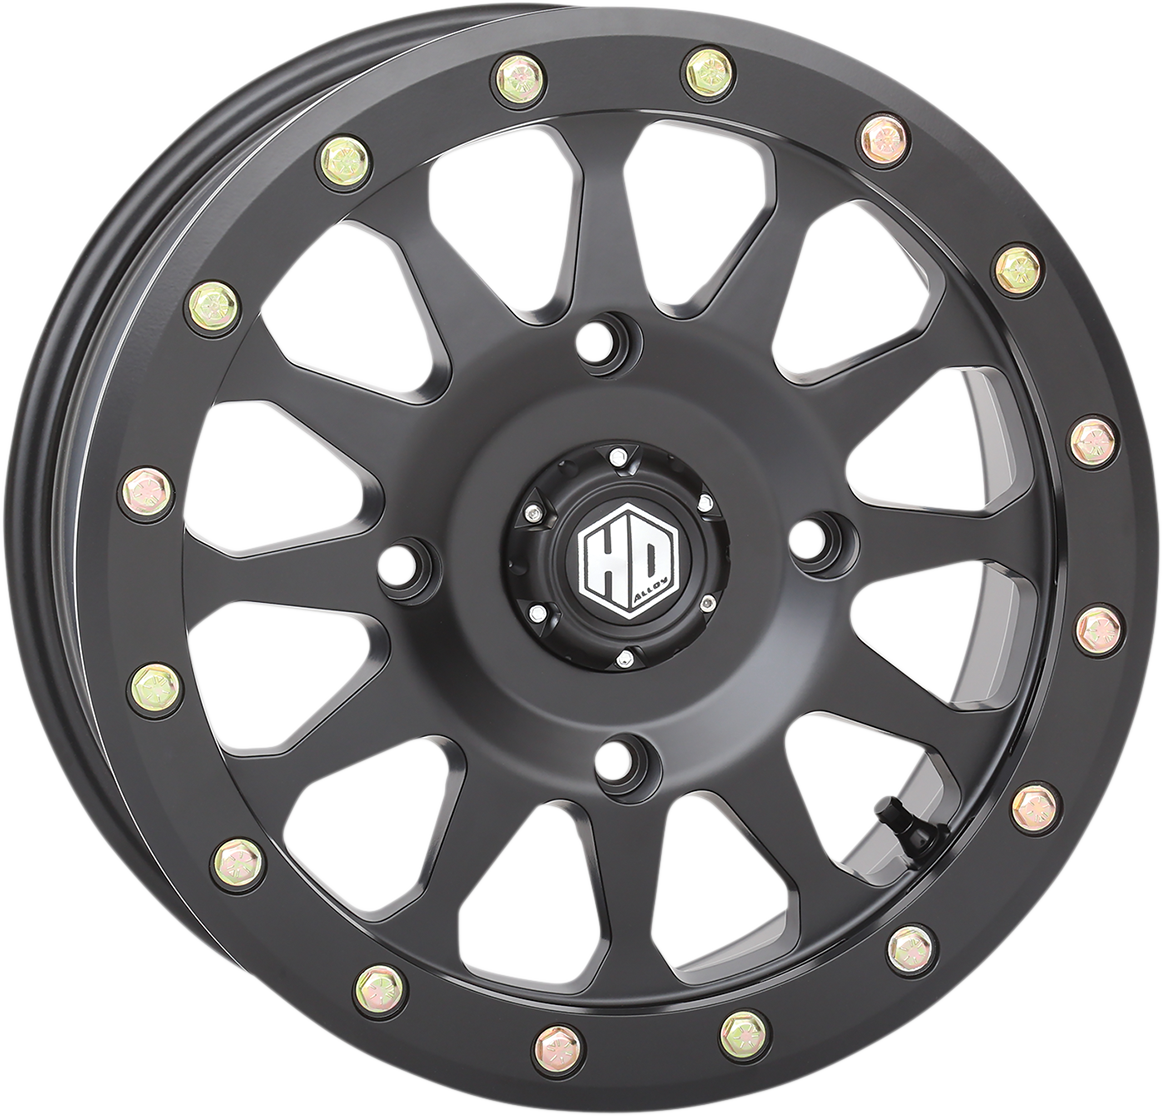 HD A1™ Beadlock Wheel Grayson Motorsports